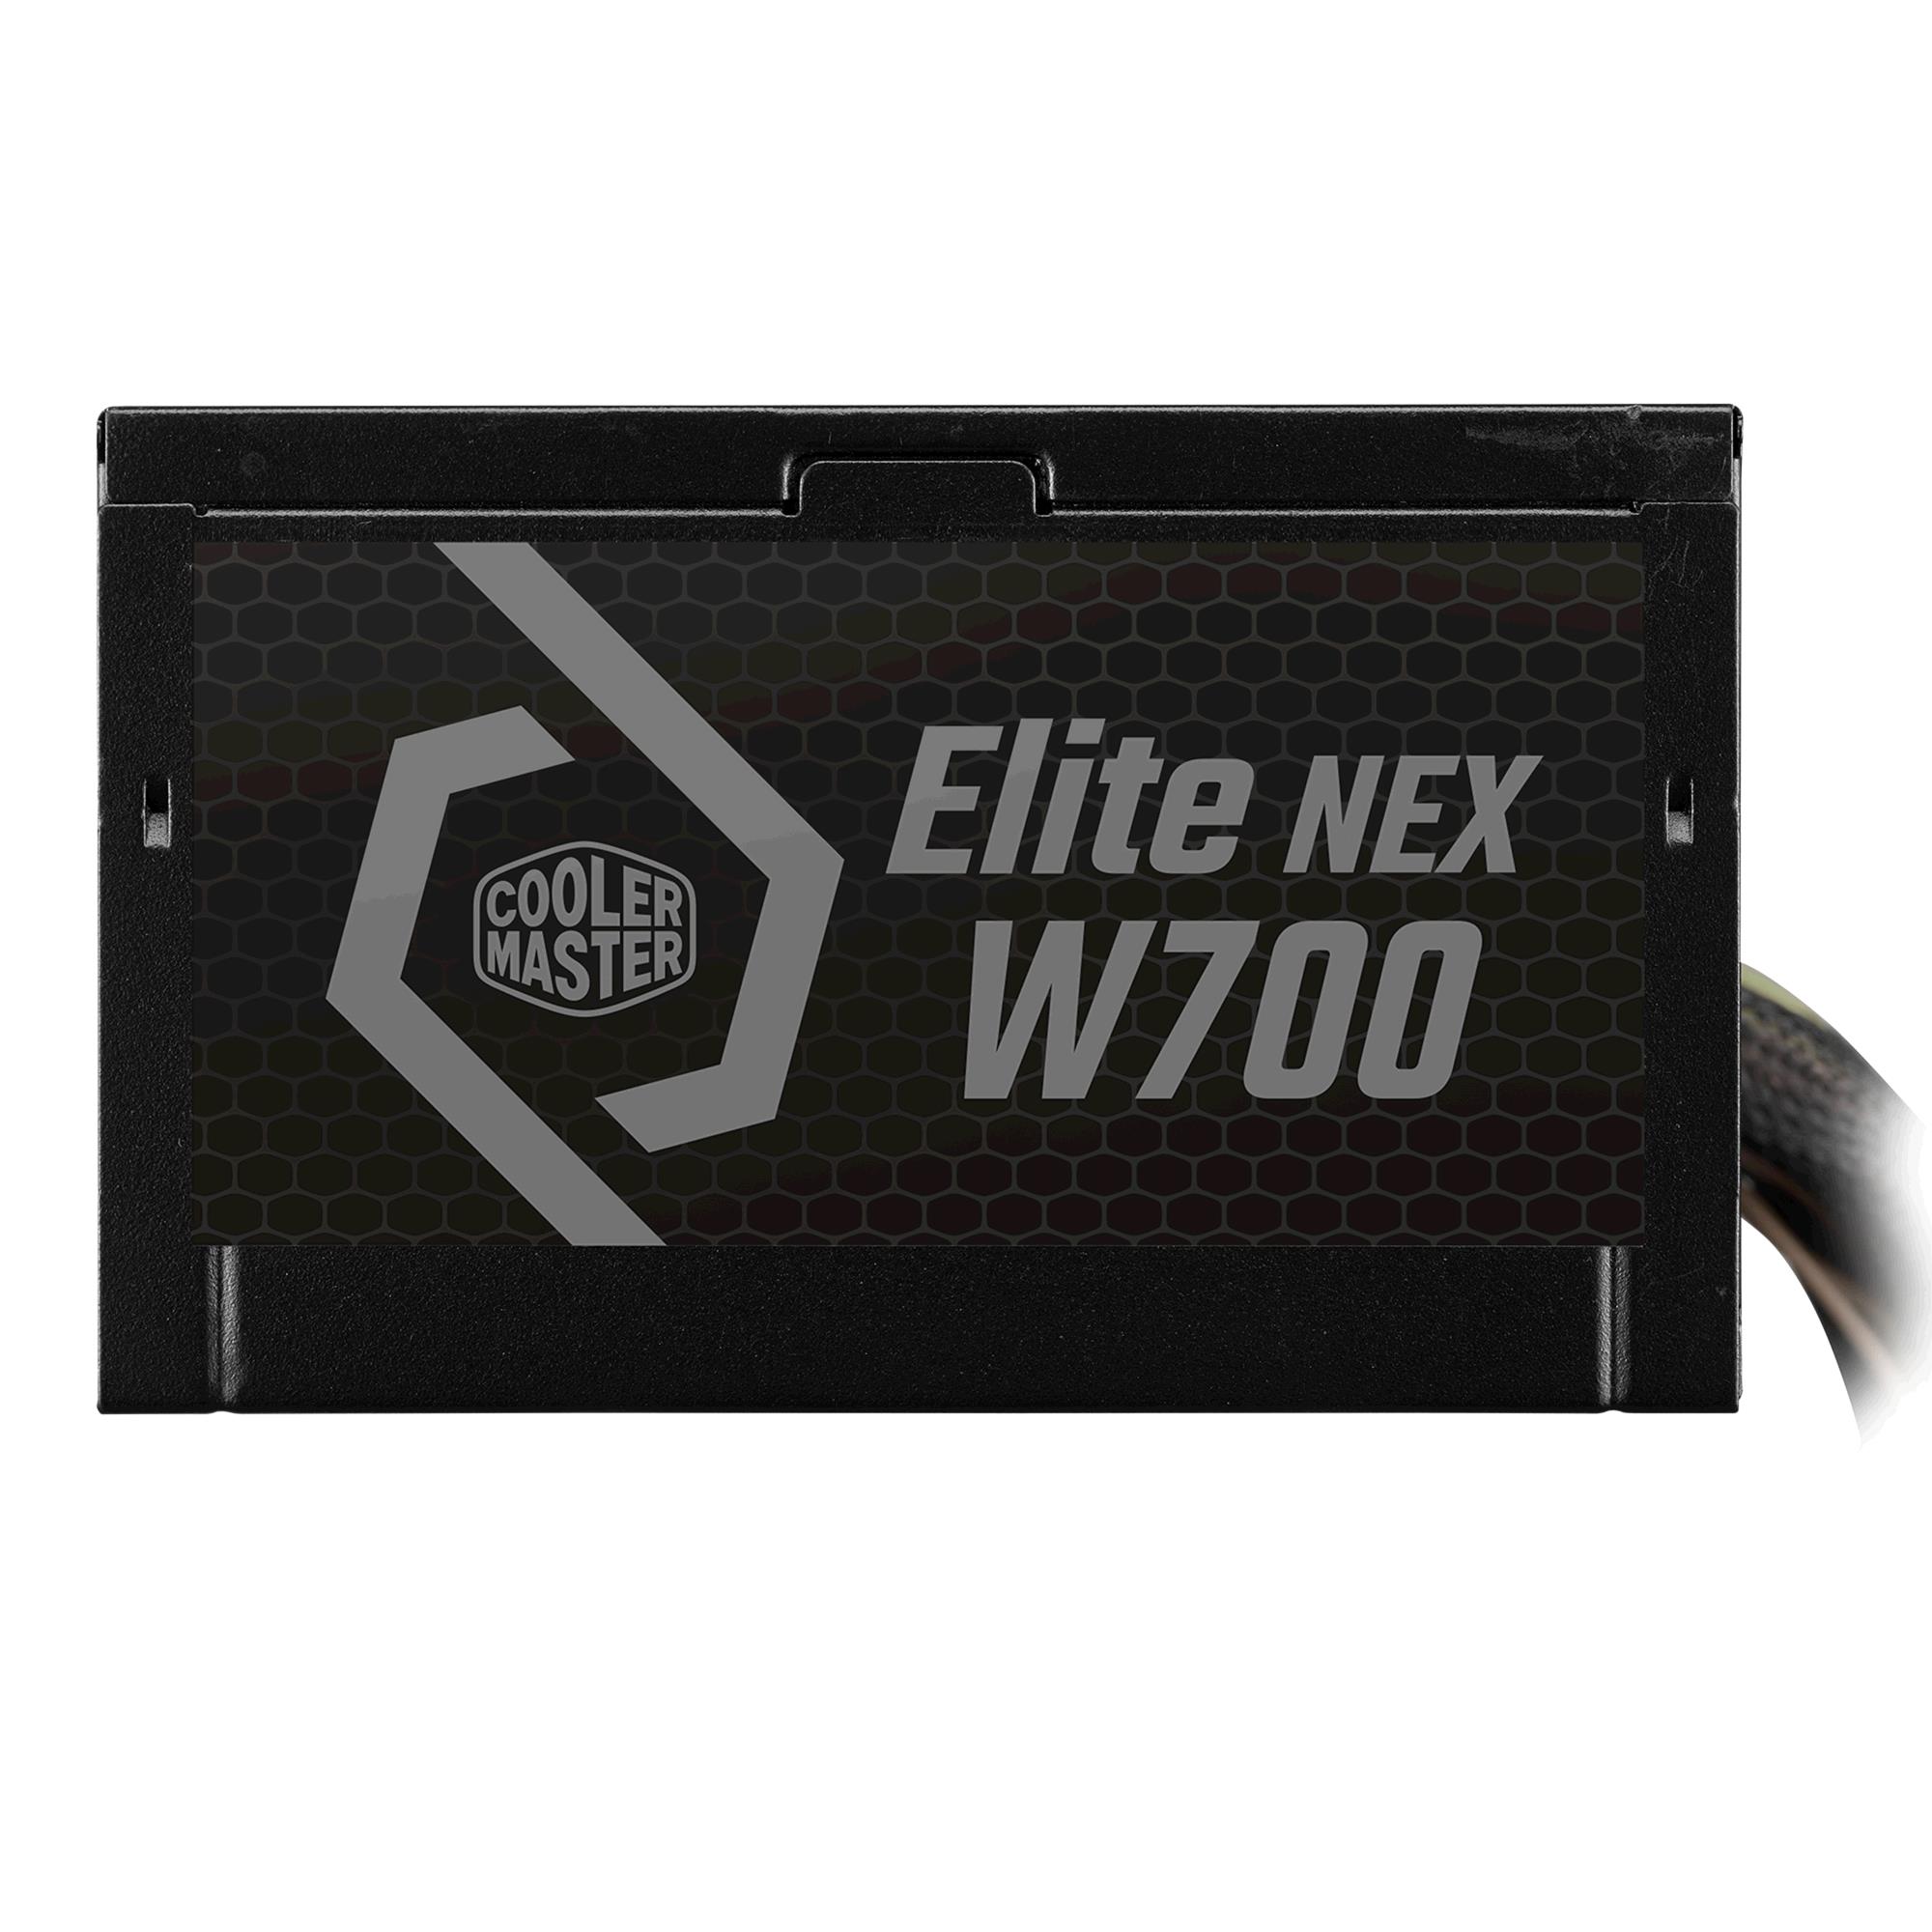 Cooler Master Elite Nex W700